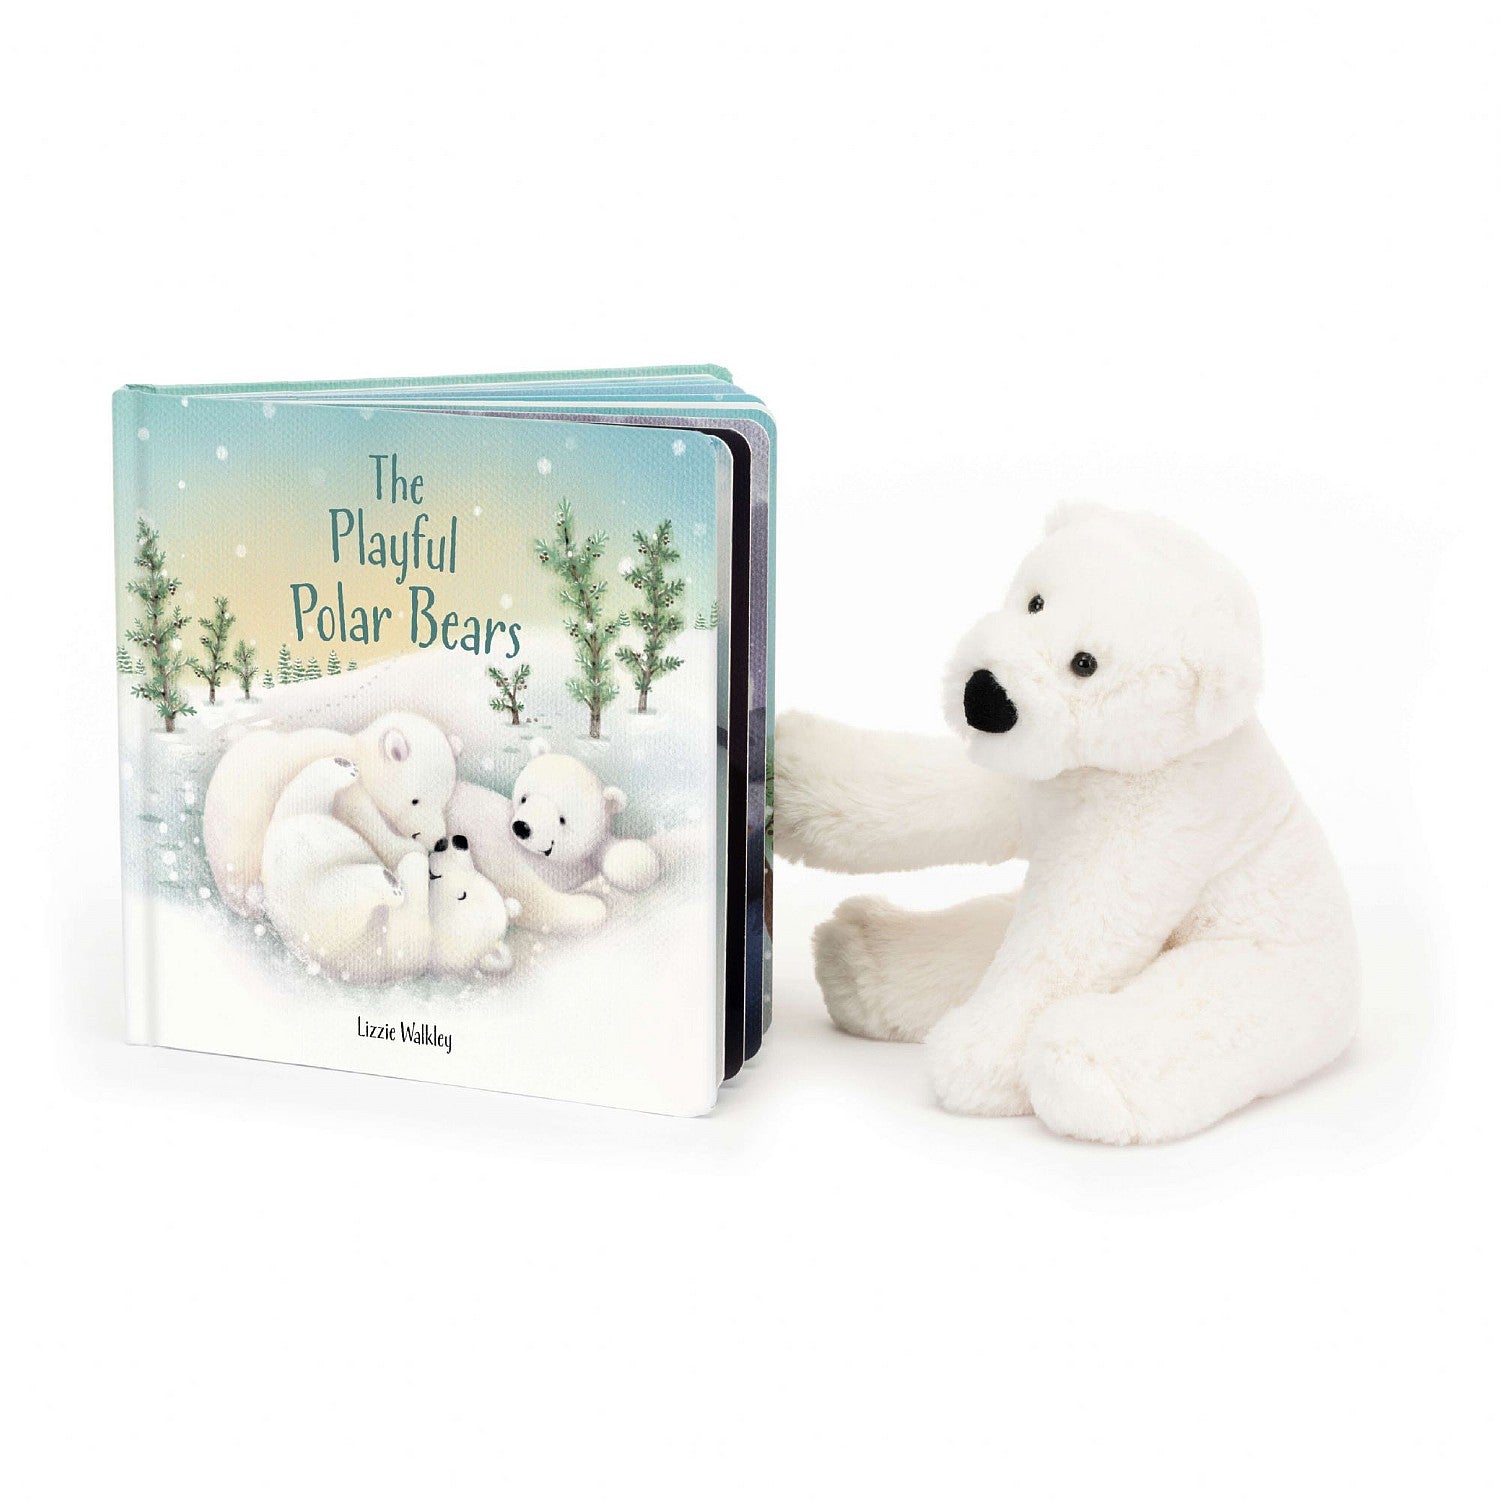 the playful polar bears book and perry polar bear toy by jellycat